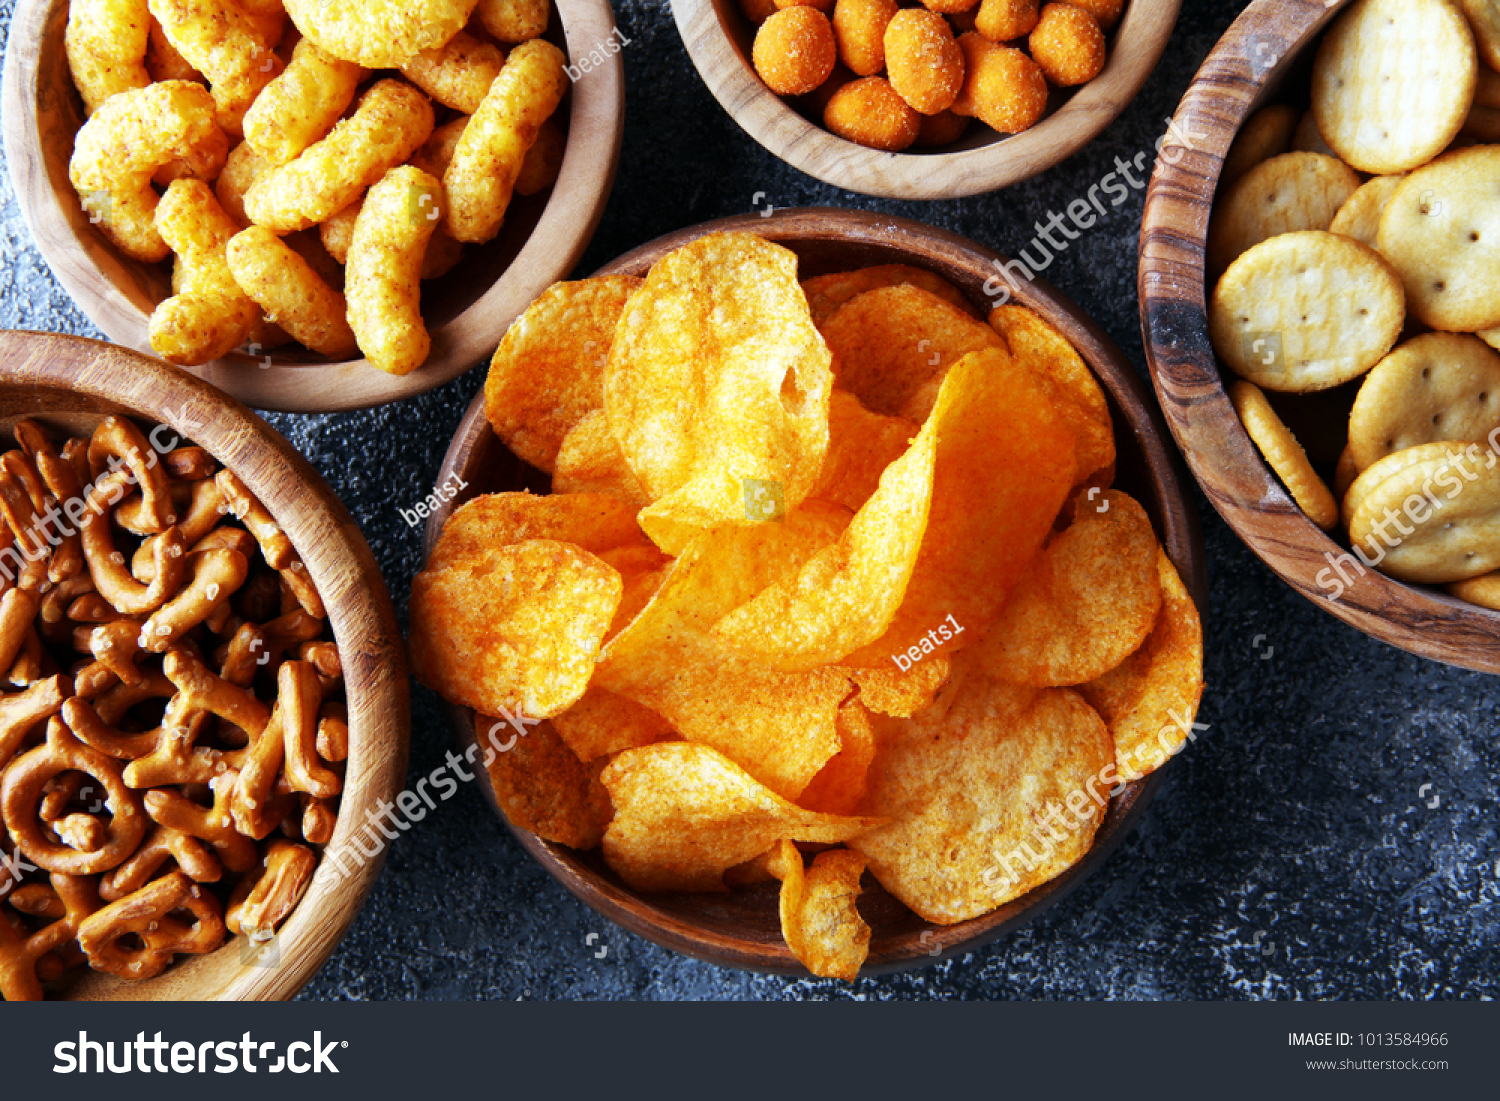 Salty snacks. Pretzels, chips, crackers in wooden bowls. #1013584966